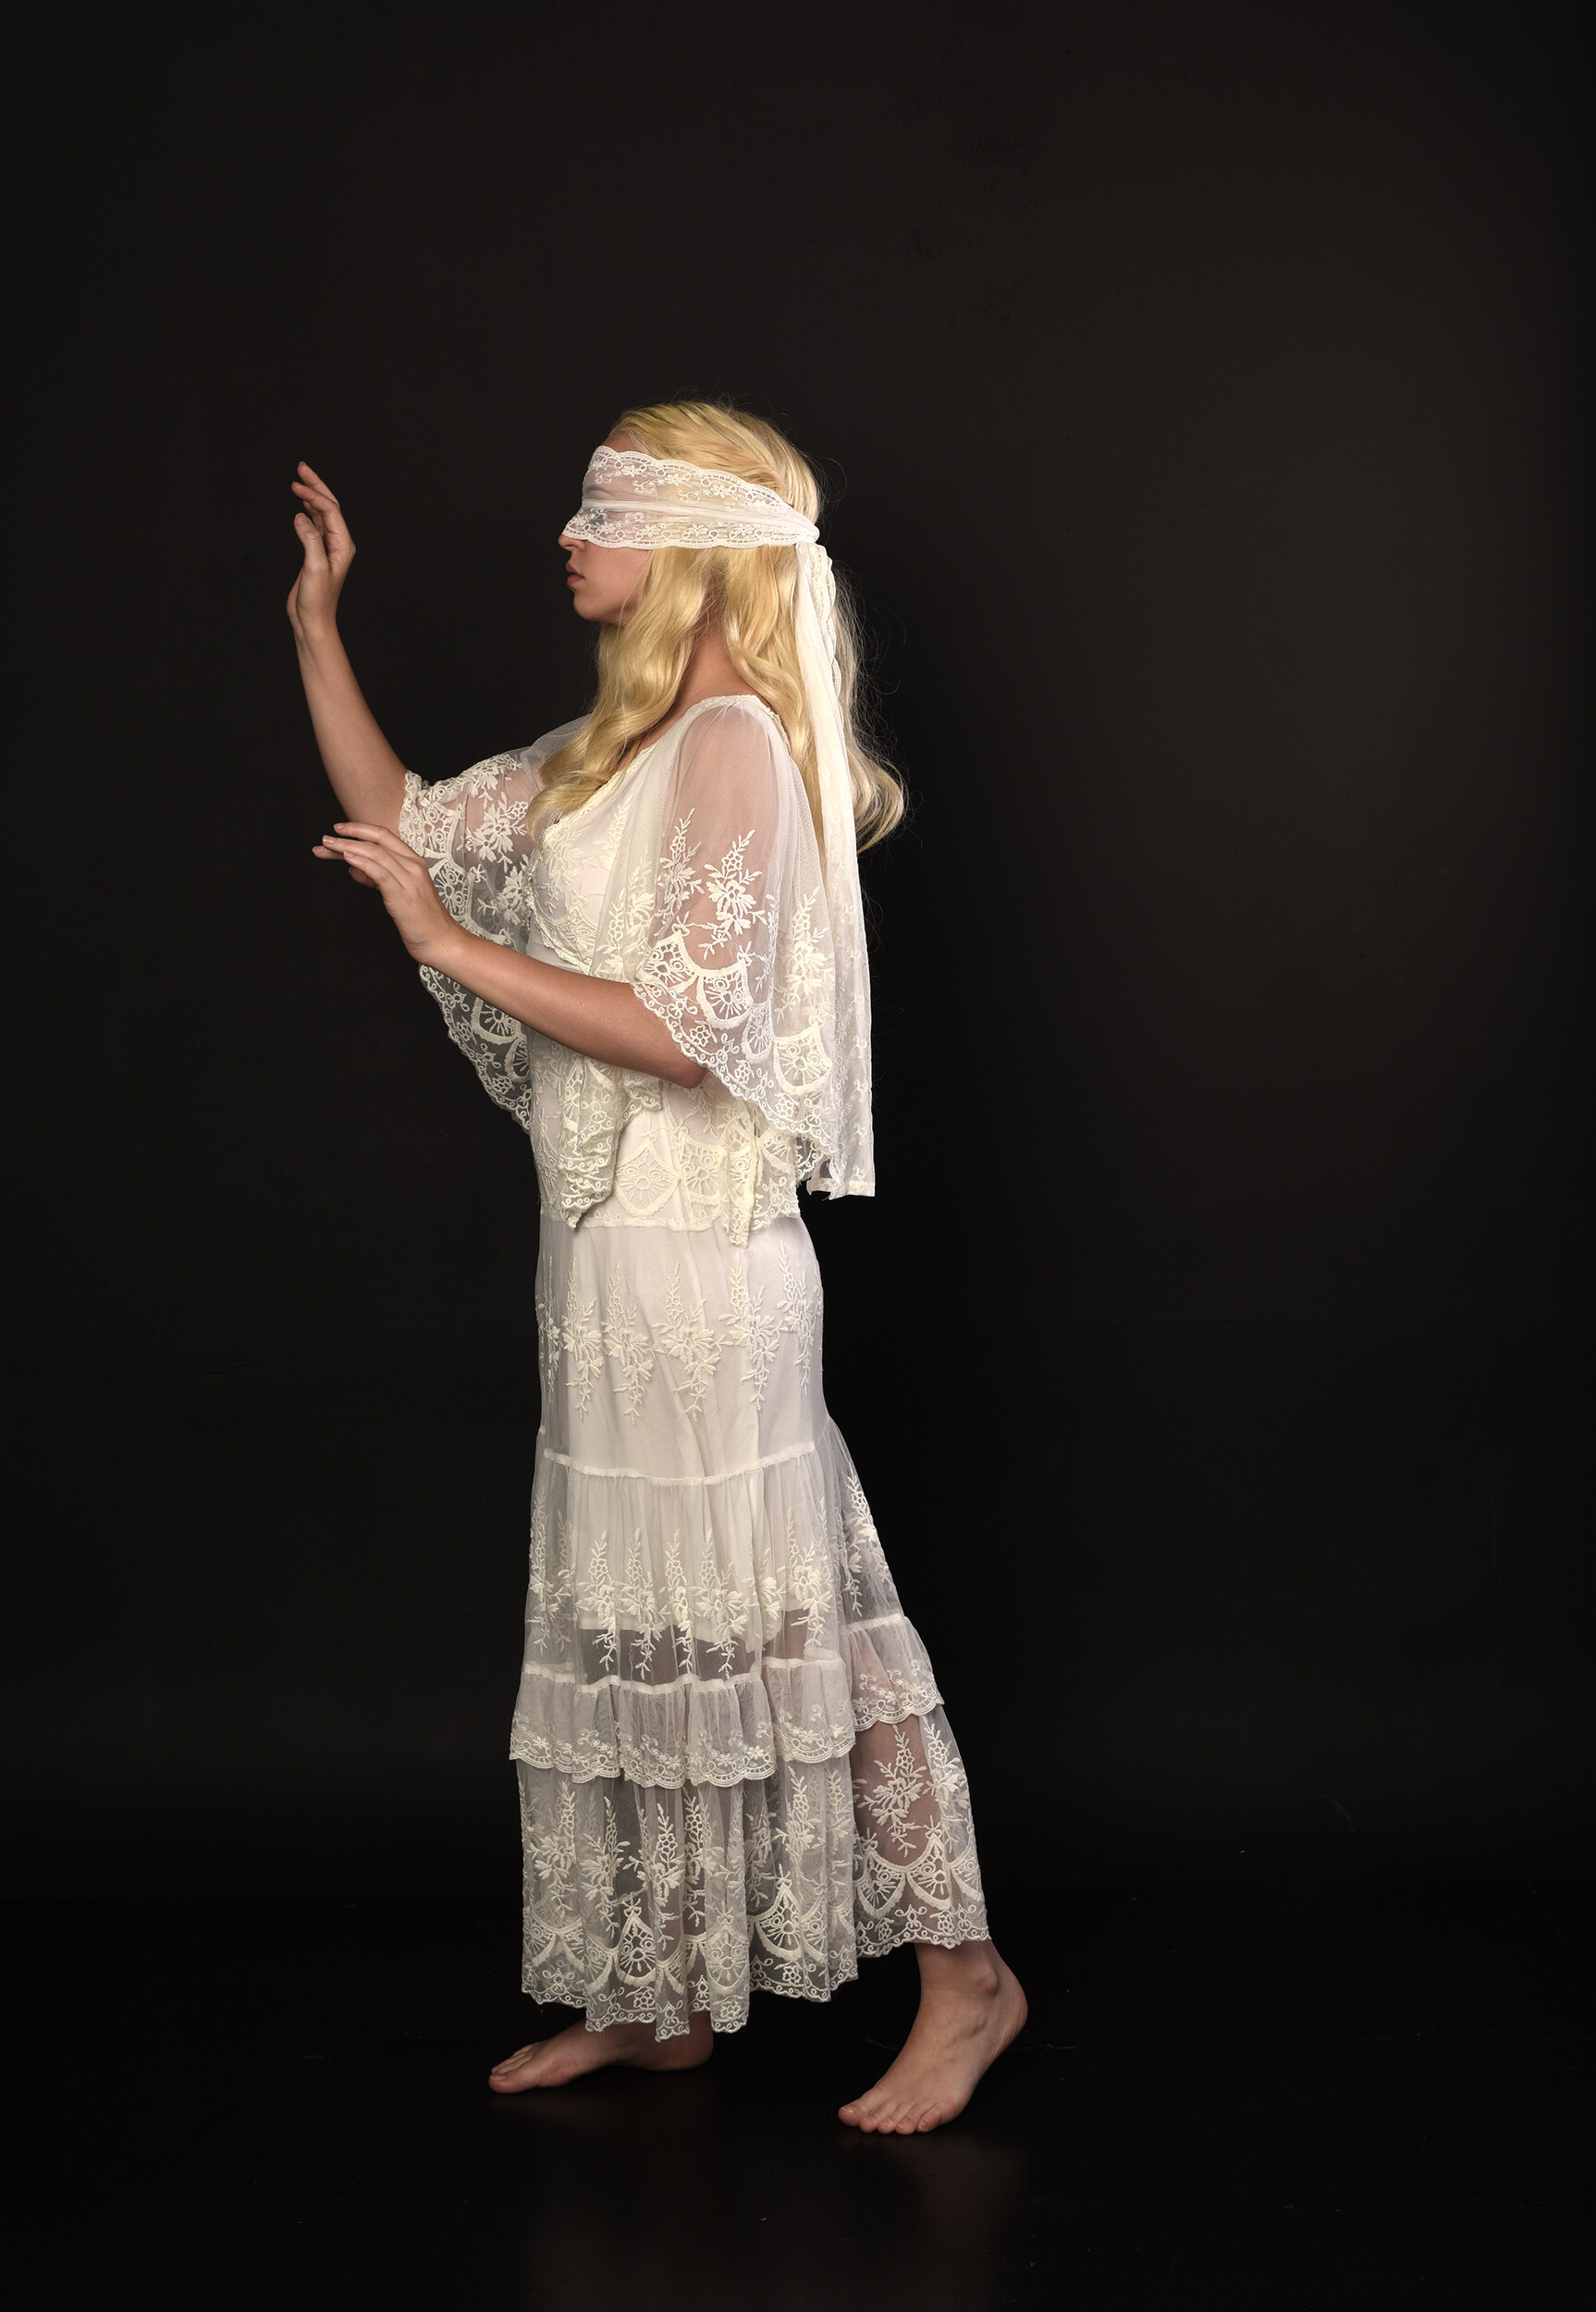 Stock Photo - Blindfolded woman  Blindfold, Stock photos, Art reference  photos